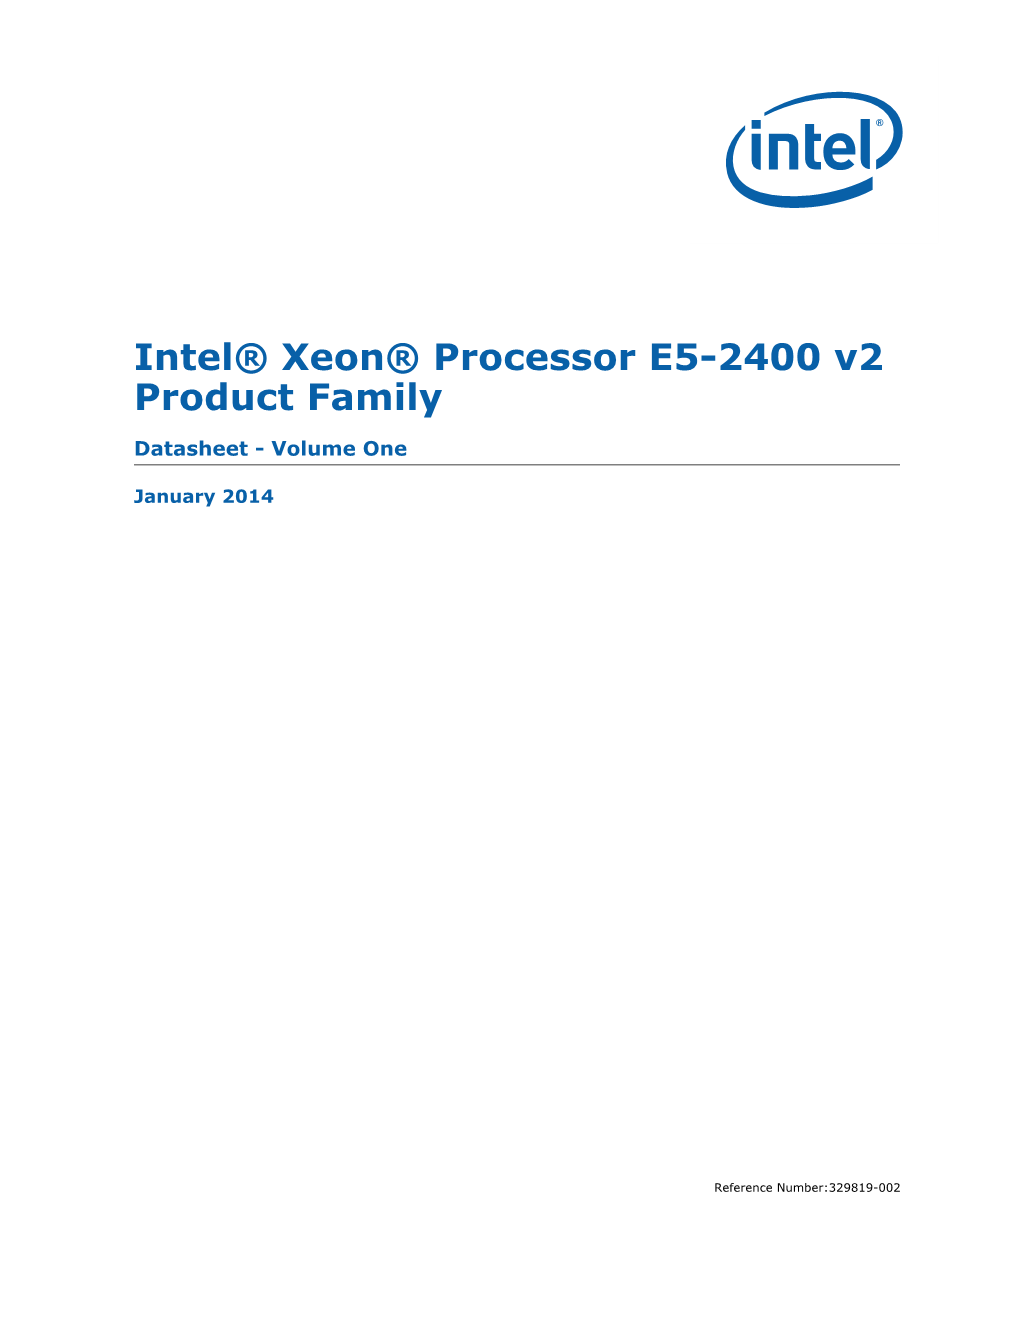 Intel® Xeon® Processor E5-2400 V2 Product Family